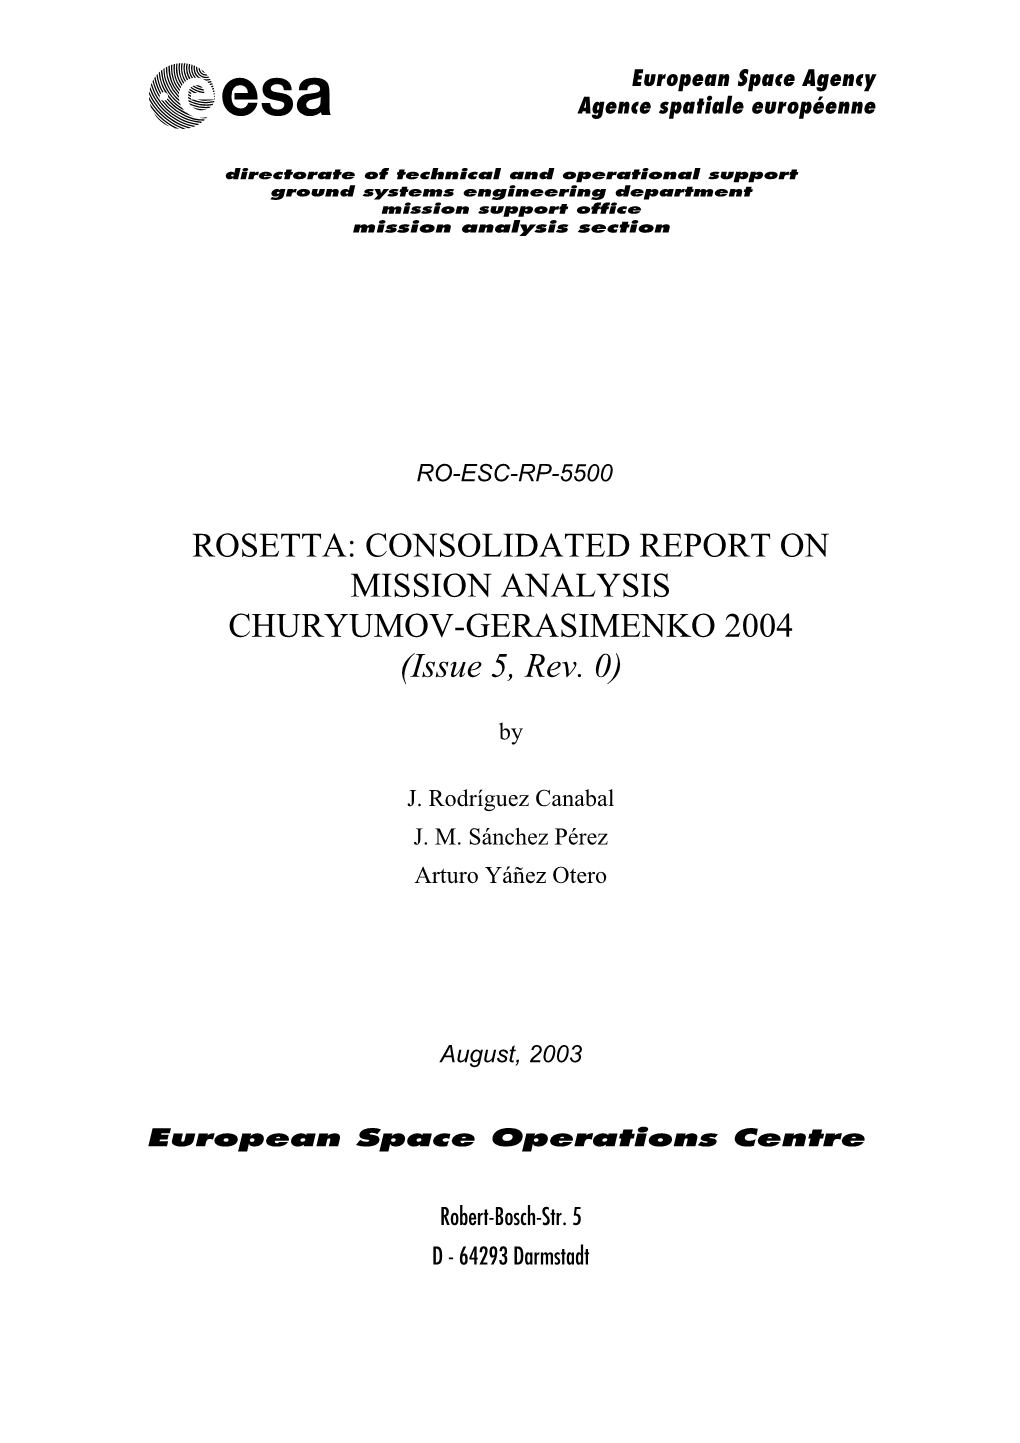 Rosetta Launch Window